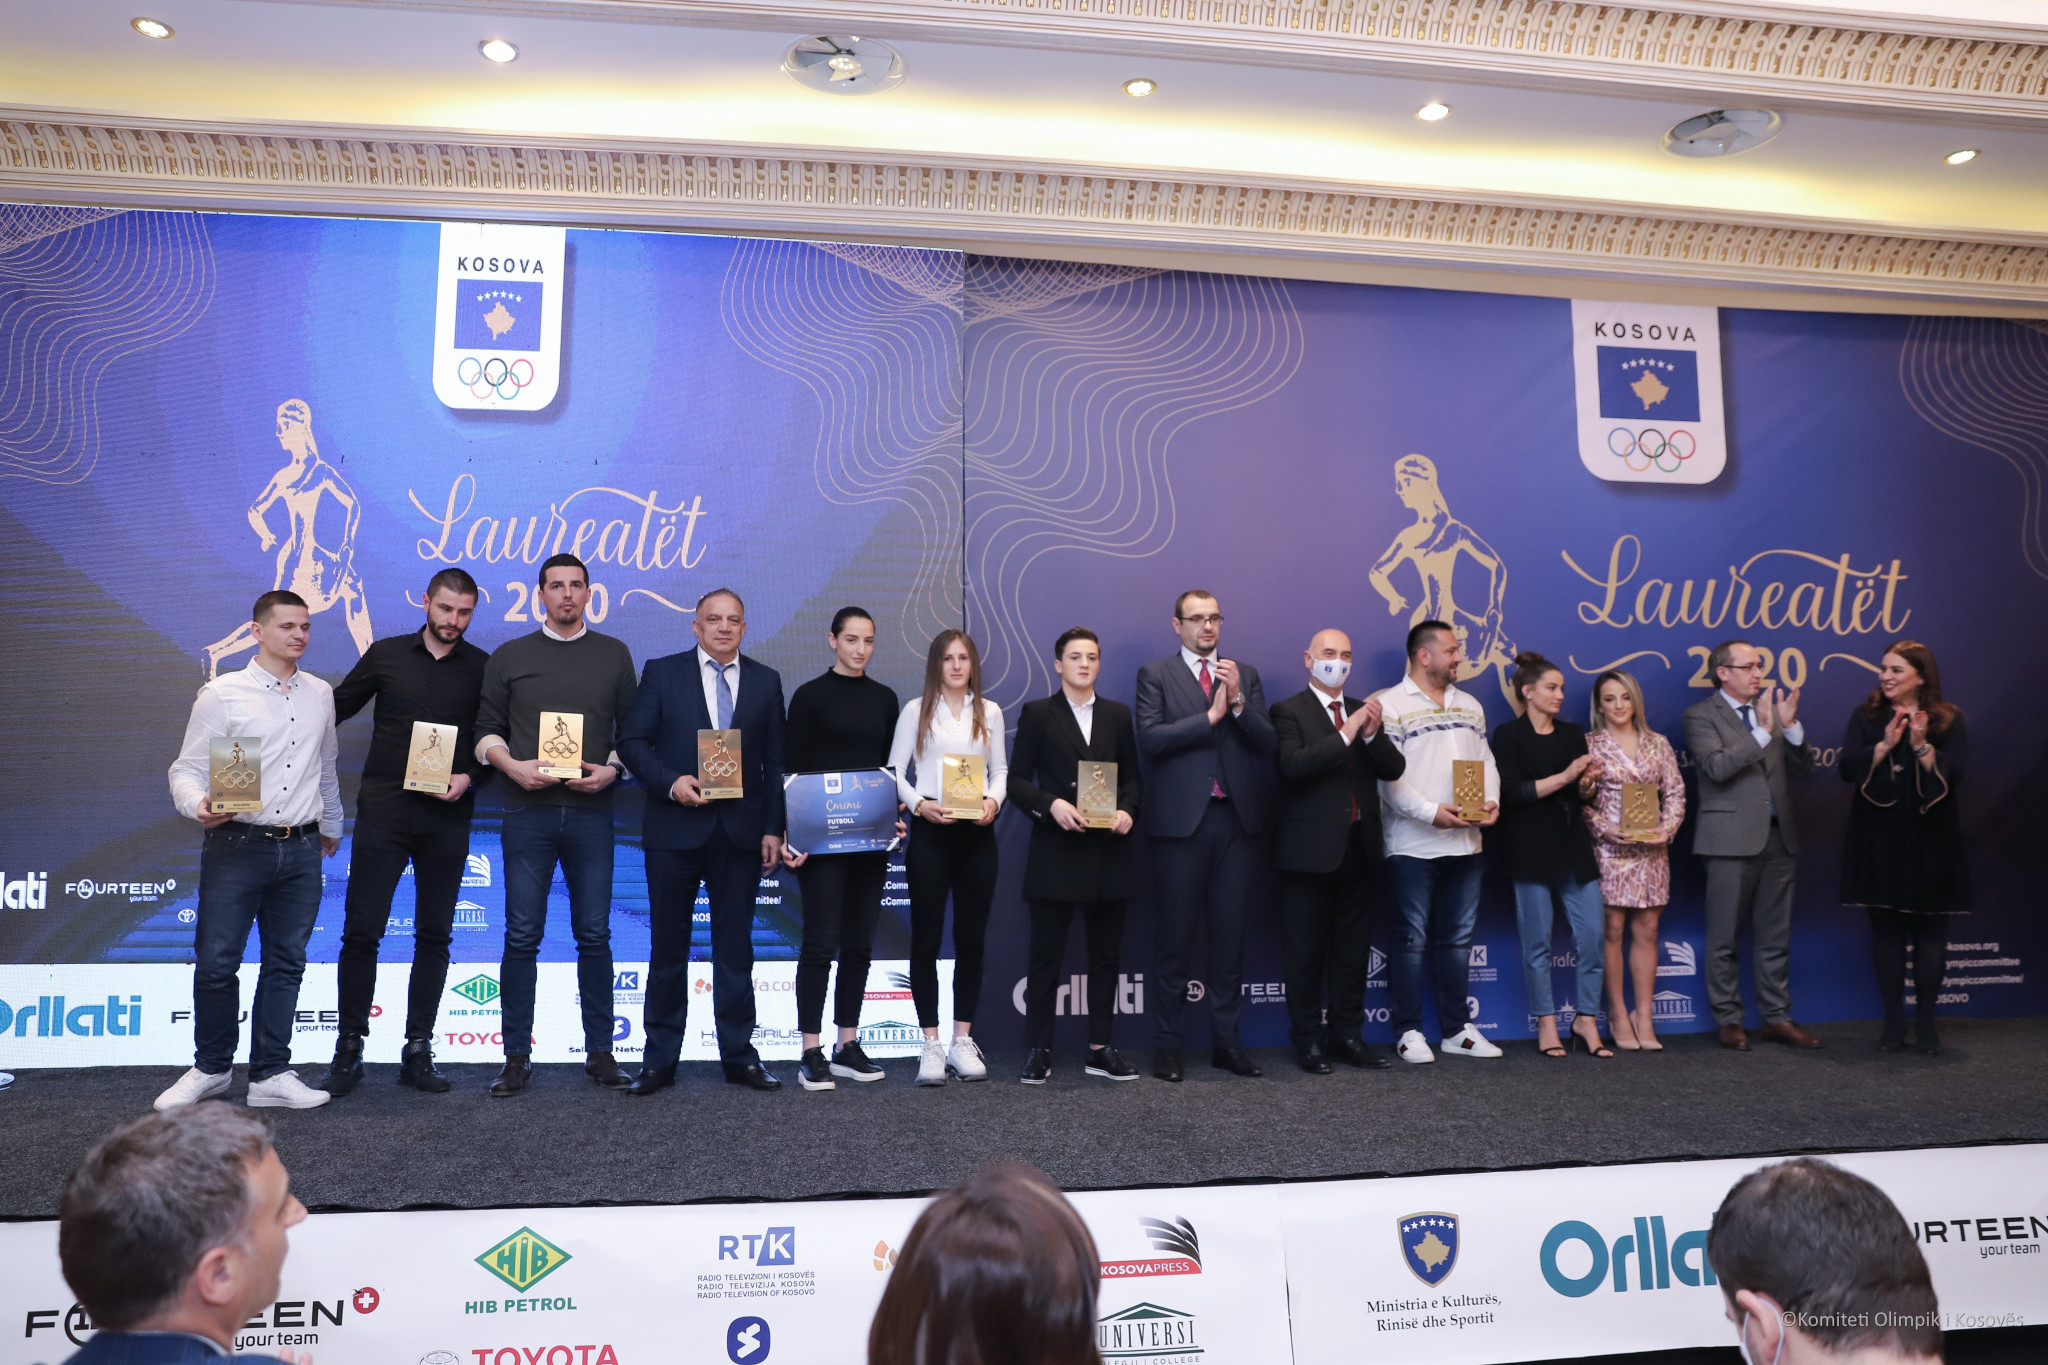 Krasniqi and Berisha scoop top prizes at Kosovo Olympic Committee awards